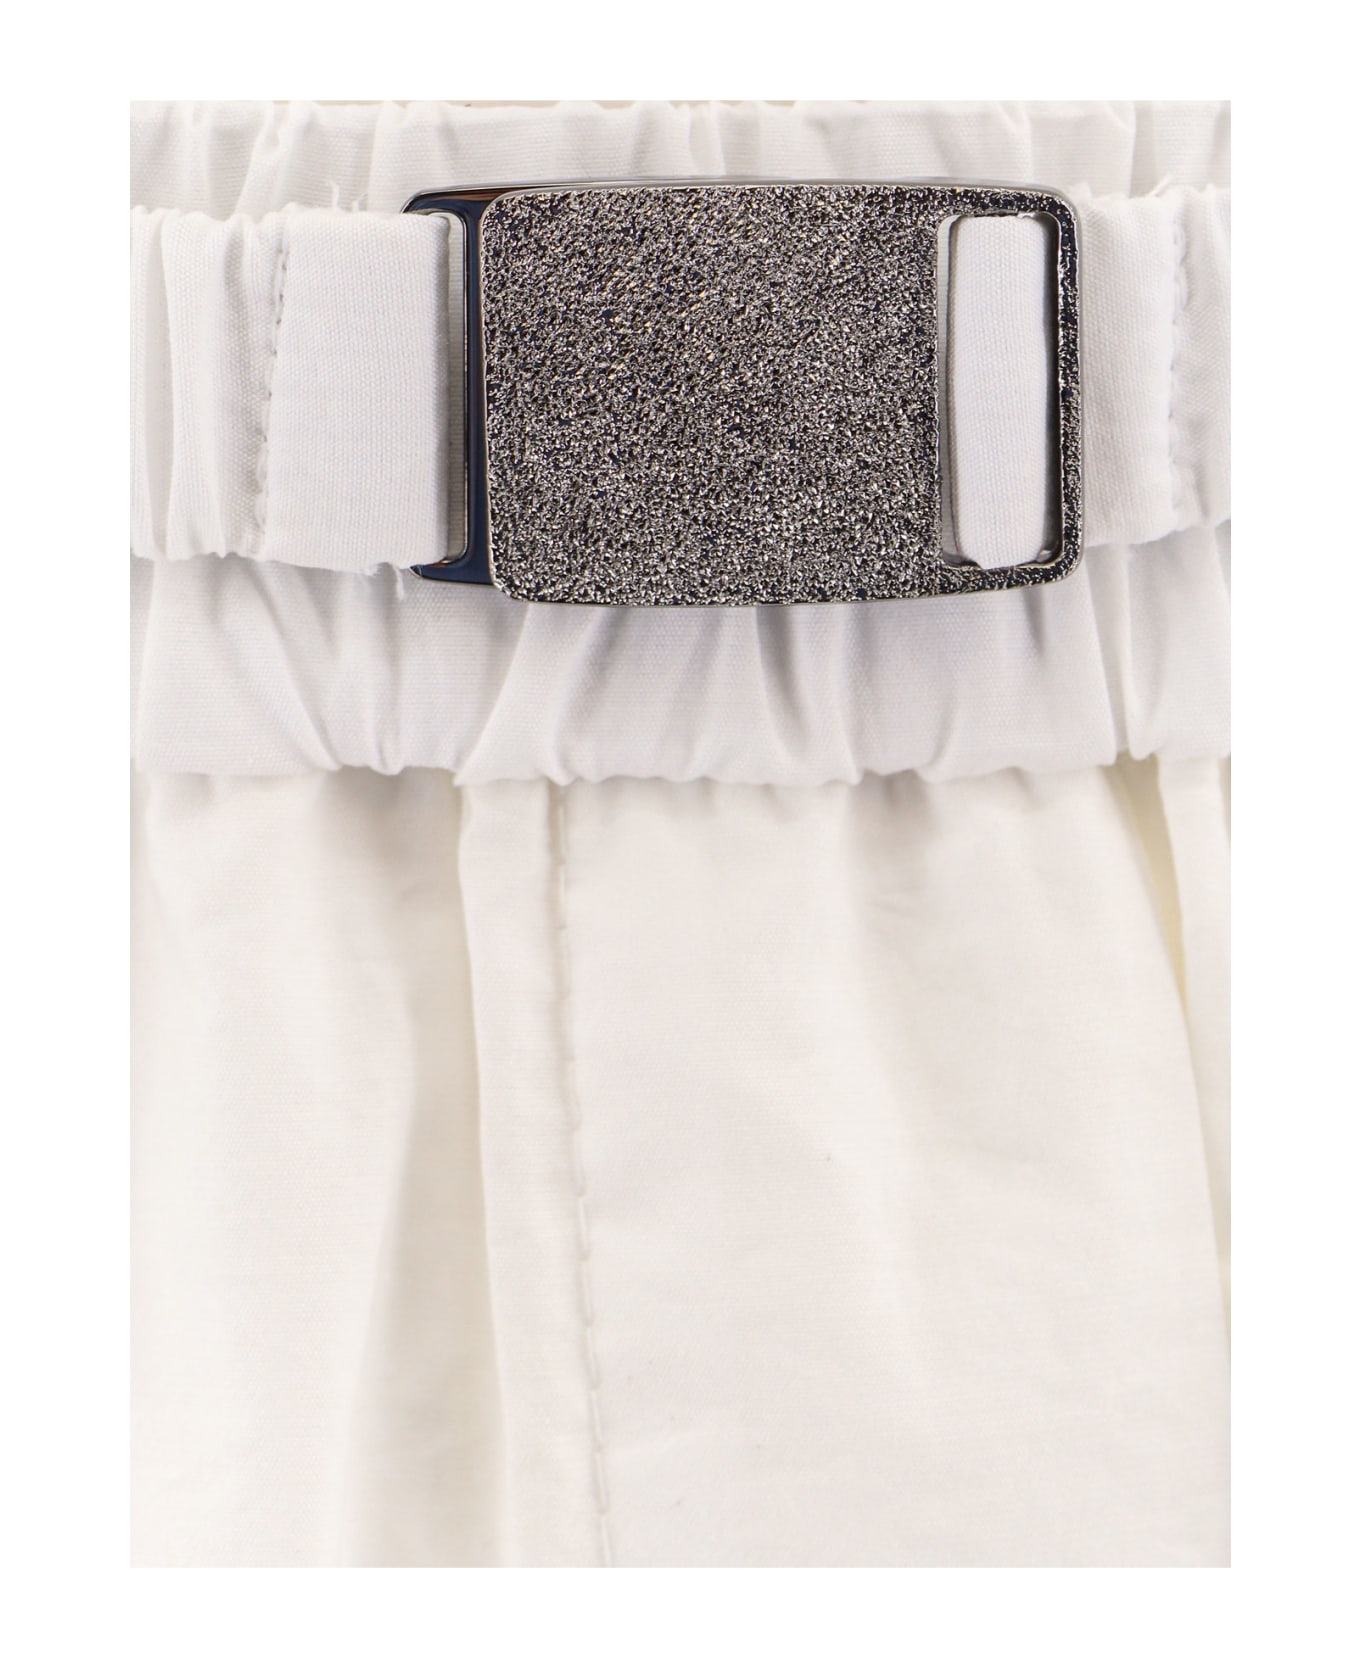 Brunello Cucinelli Cotton Blend Midi Skirt - White